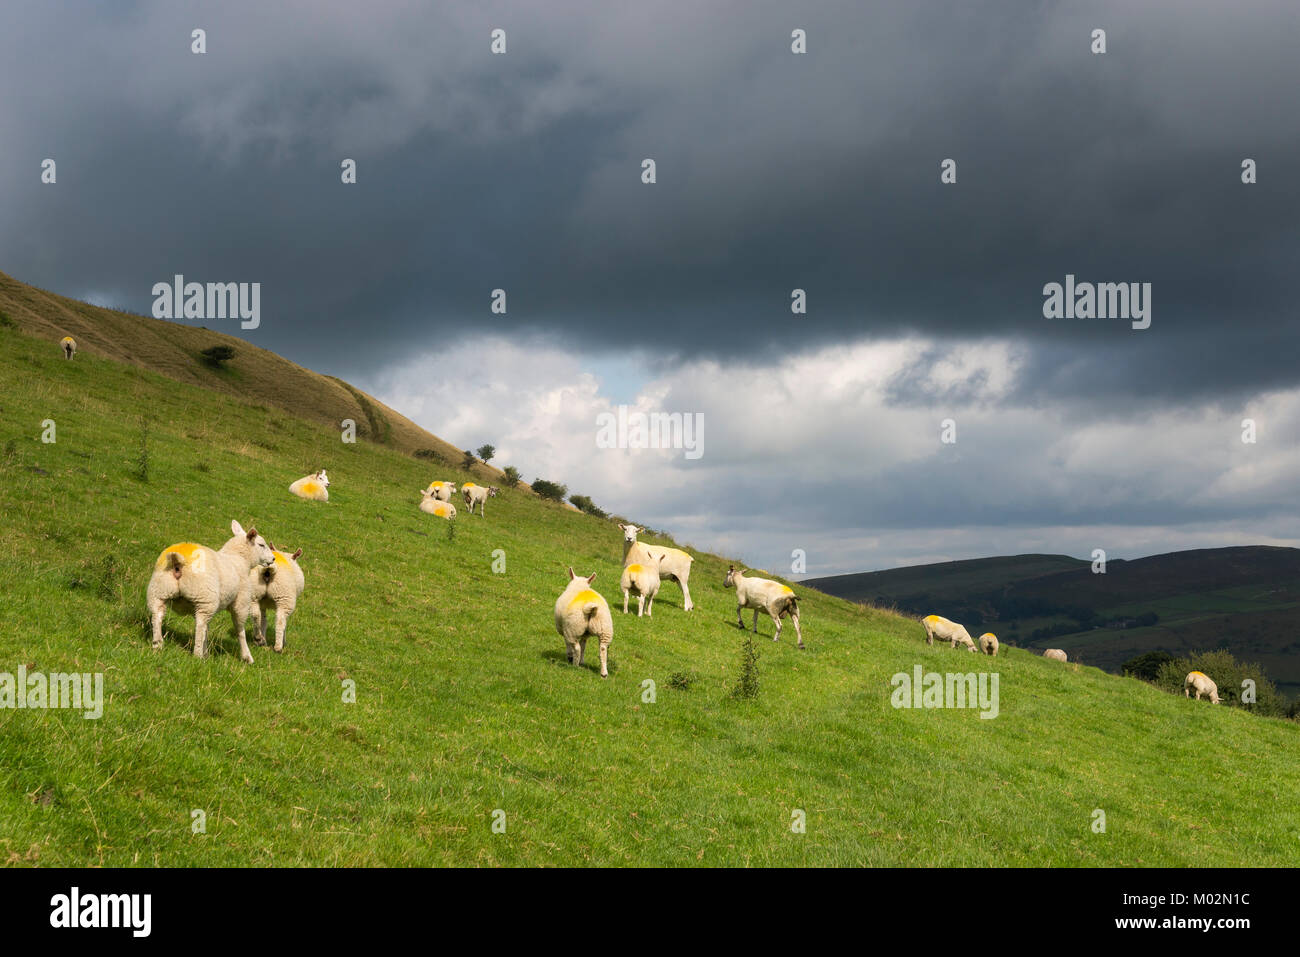 Sheep on a hillside near Hayfield, Derbyshire, England. Summer sunshine on the hillside under a dark grey sky. Stock Photo